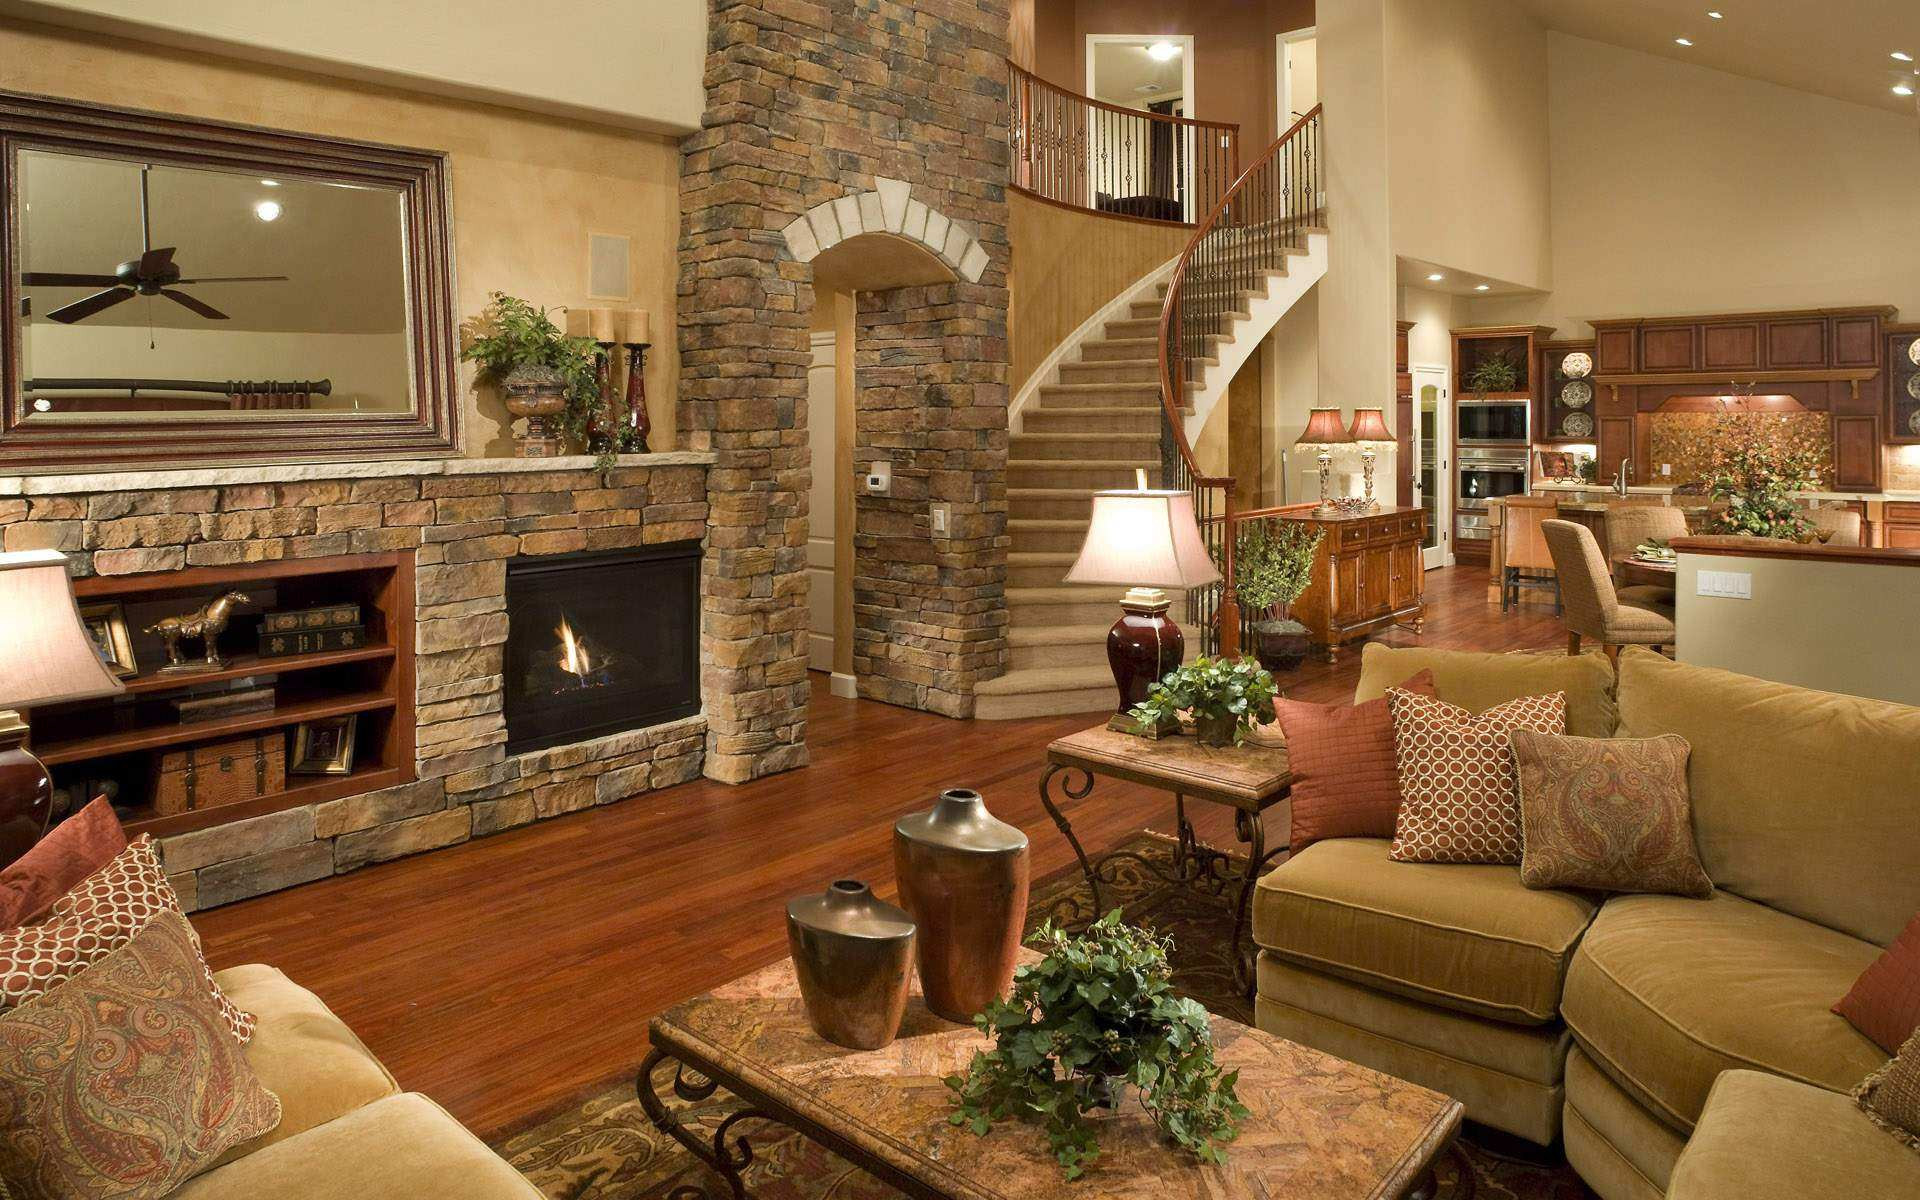 Interior Design Living Room Ideas
 25 Stunning Home Interior Designs Ideas – The WoW Style